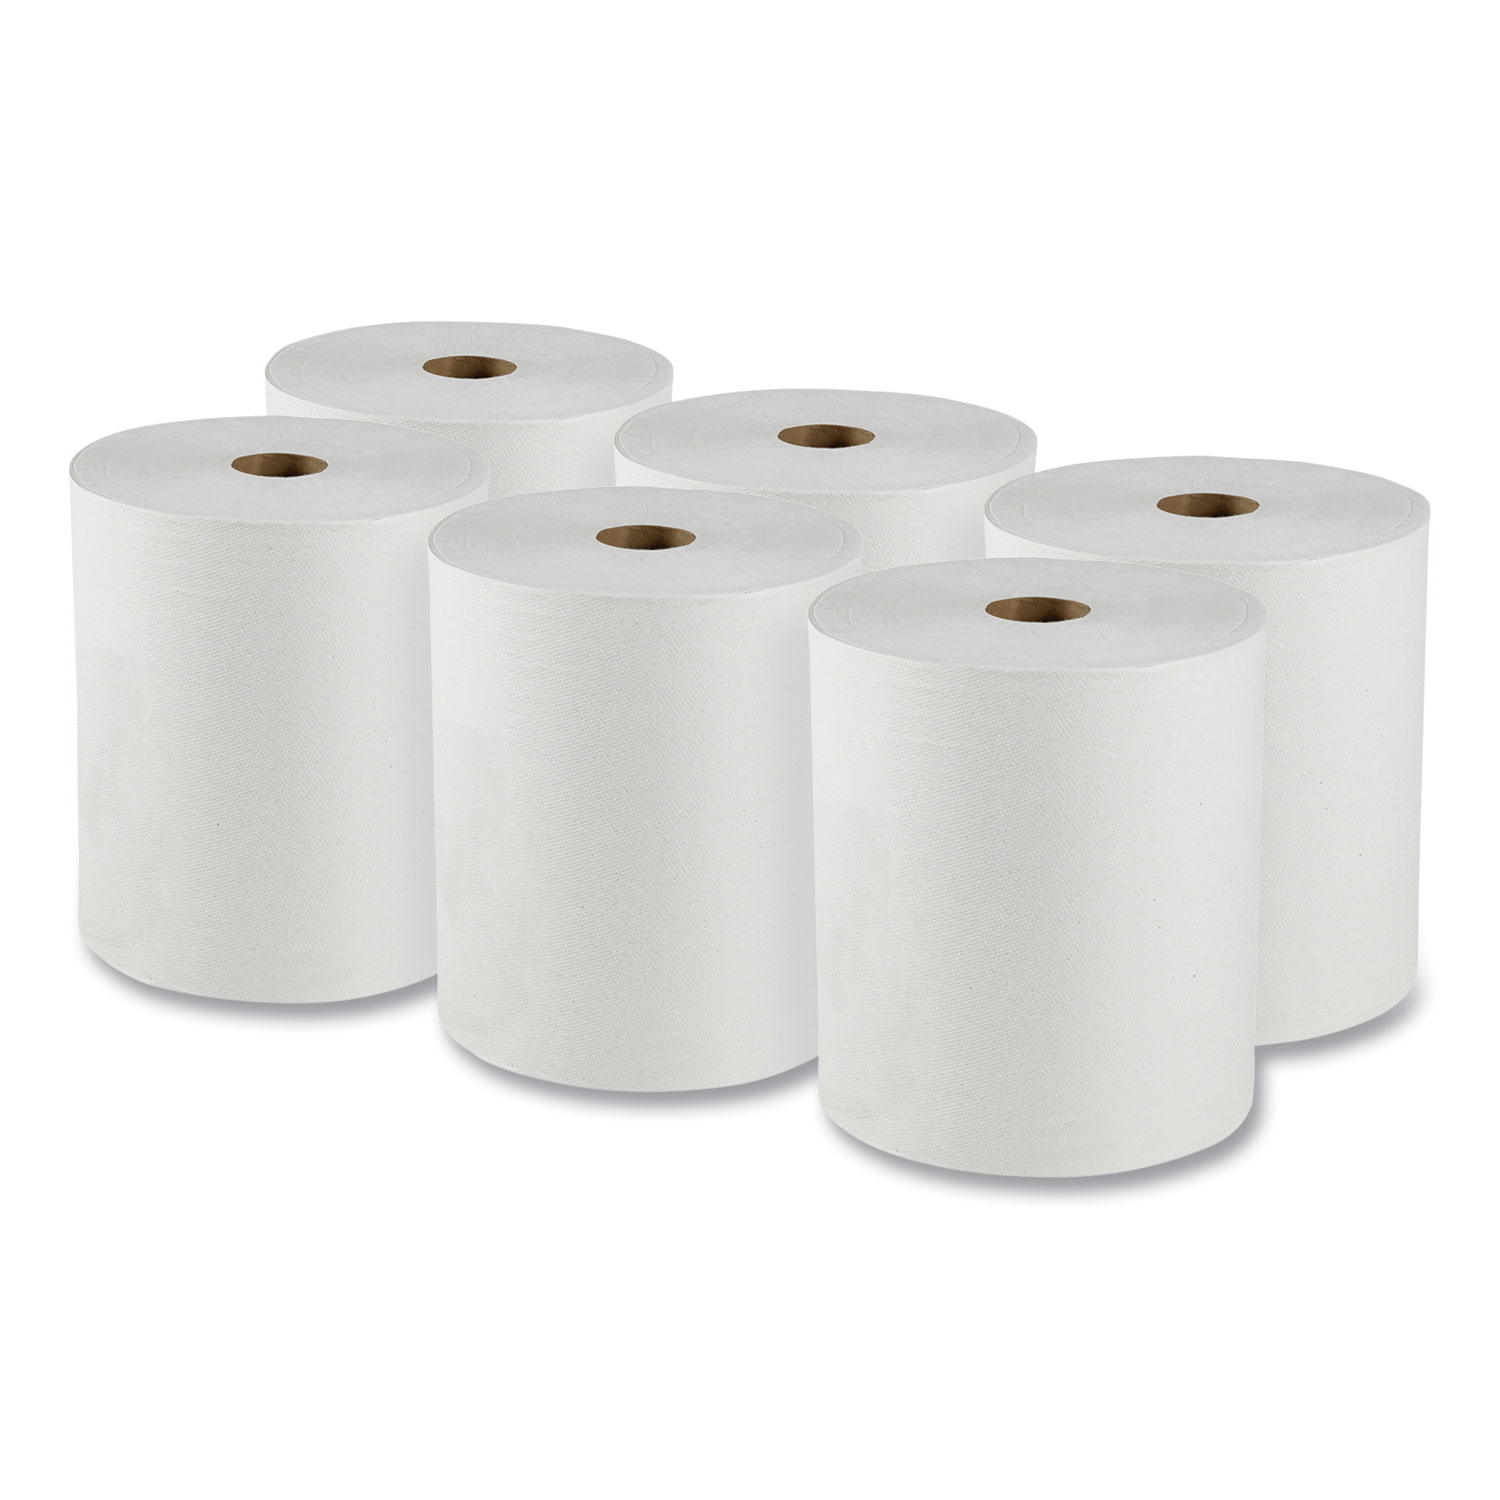 Scott KCC47032 Slimroll Hard Roll Towels 8 580 ft White 6